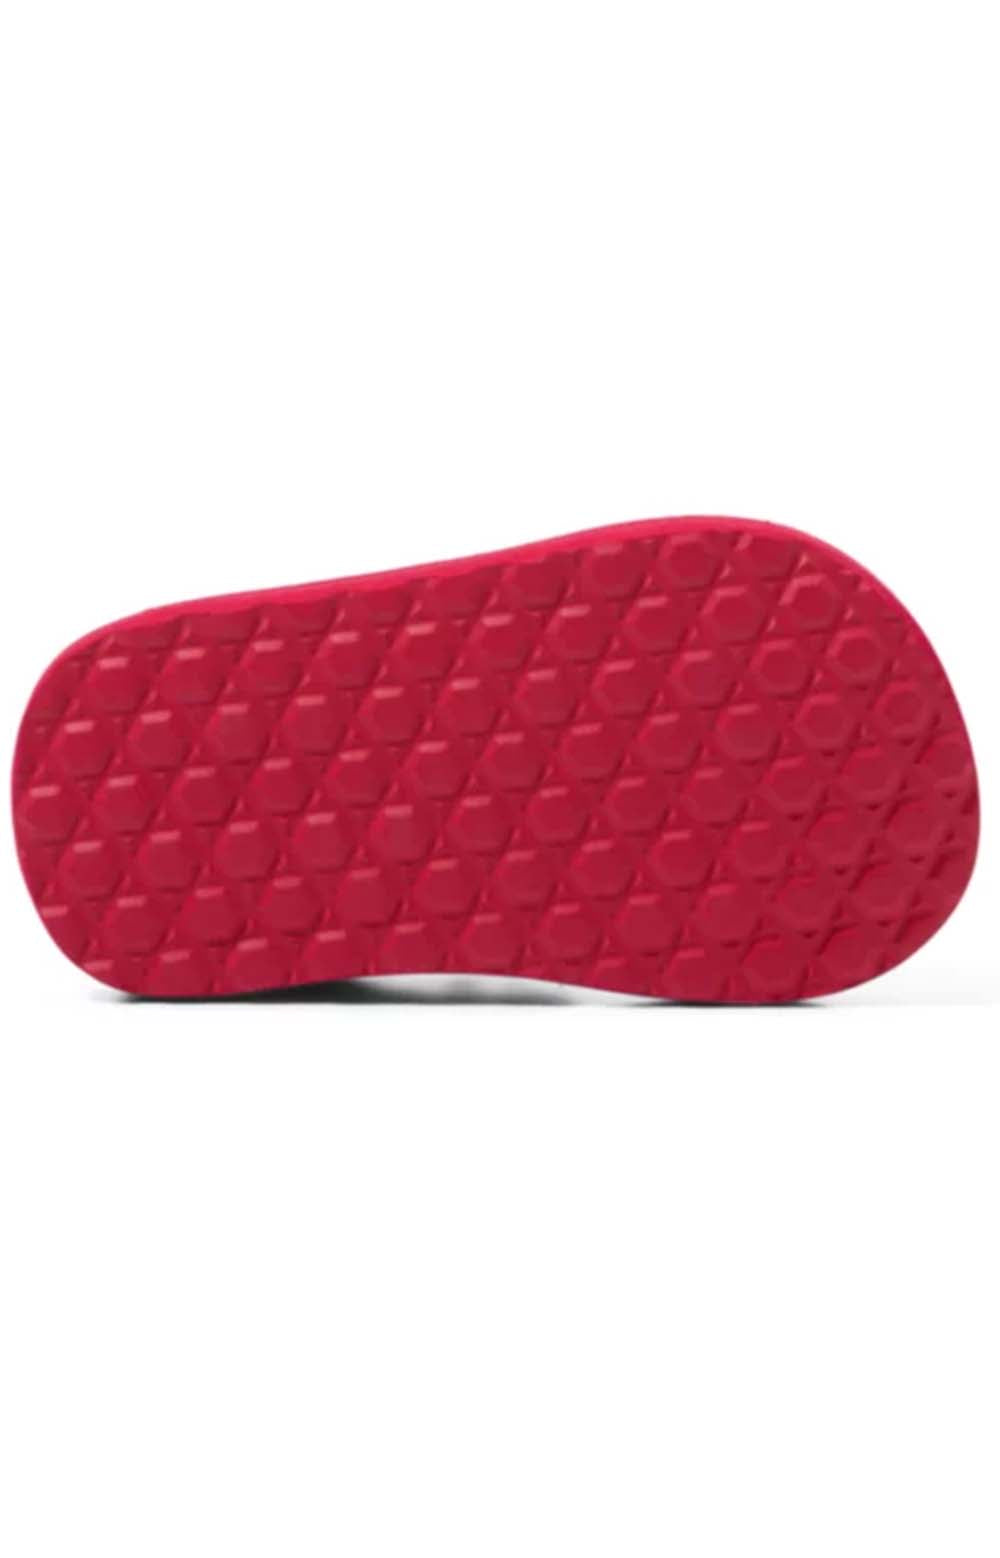 (DXFASD) Tri-Lock Sandals - Red